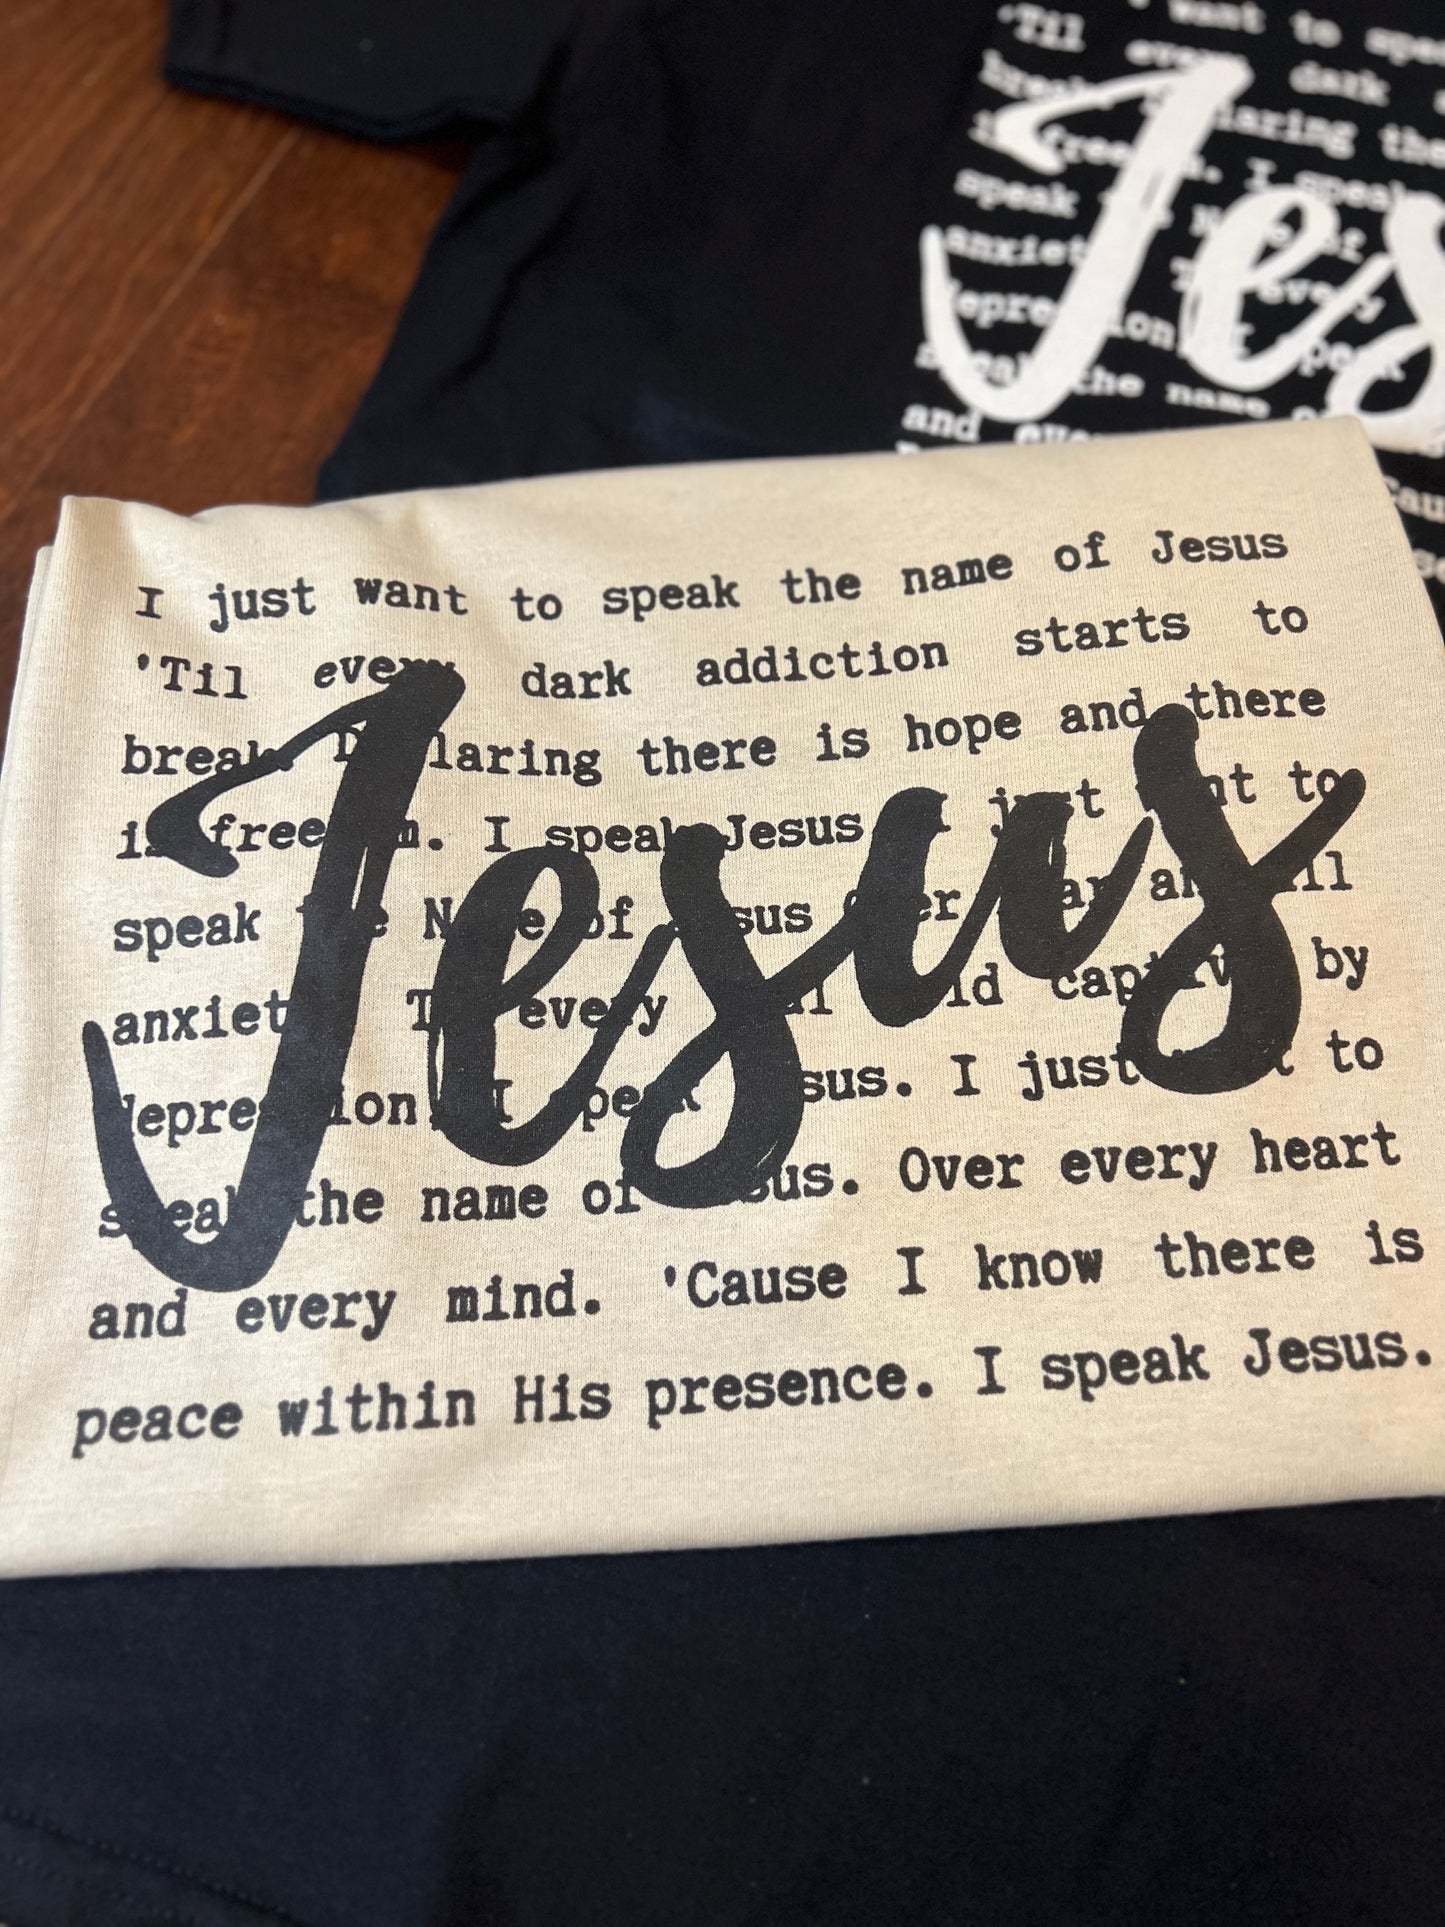 SPEAK JESUS